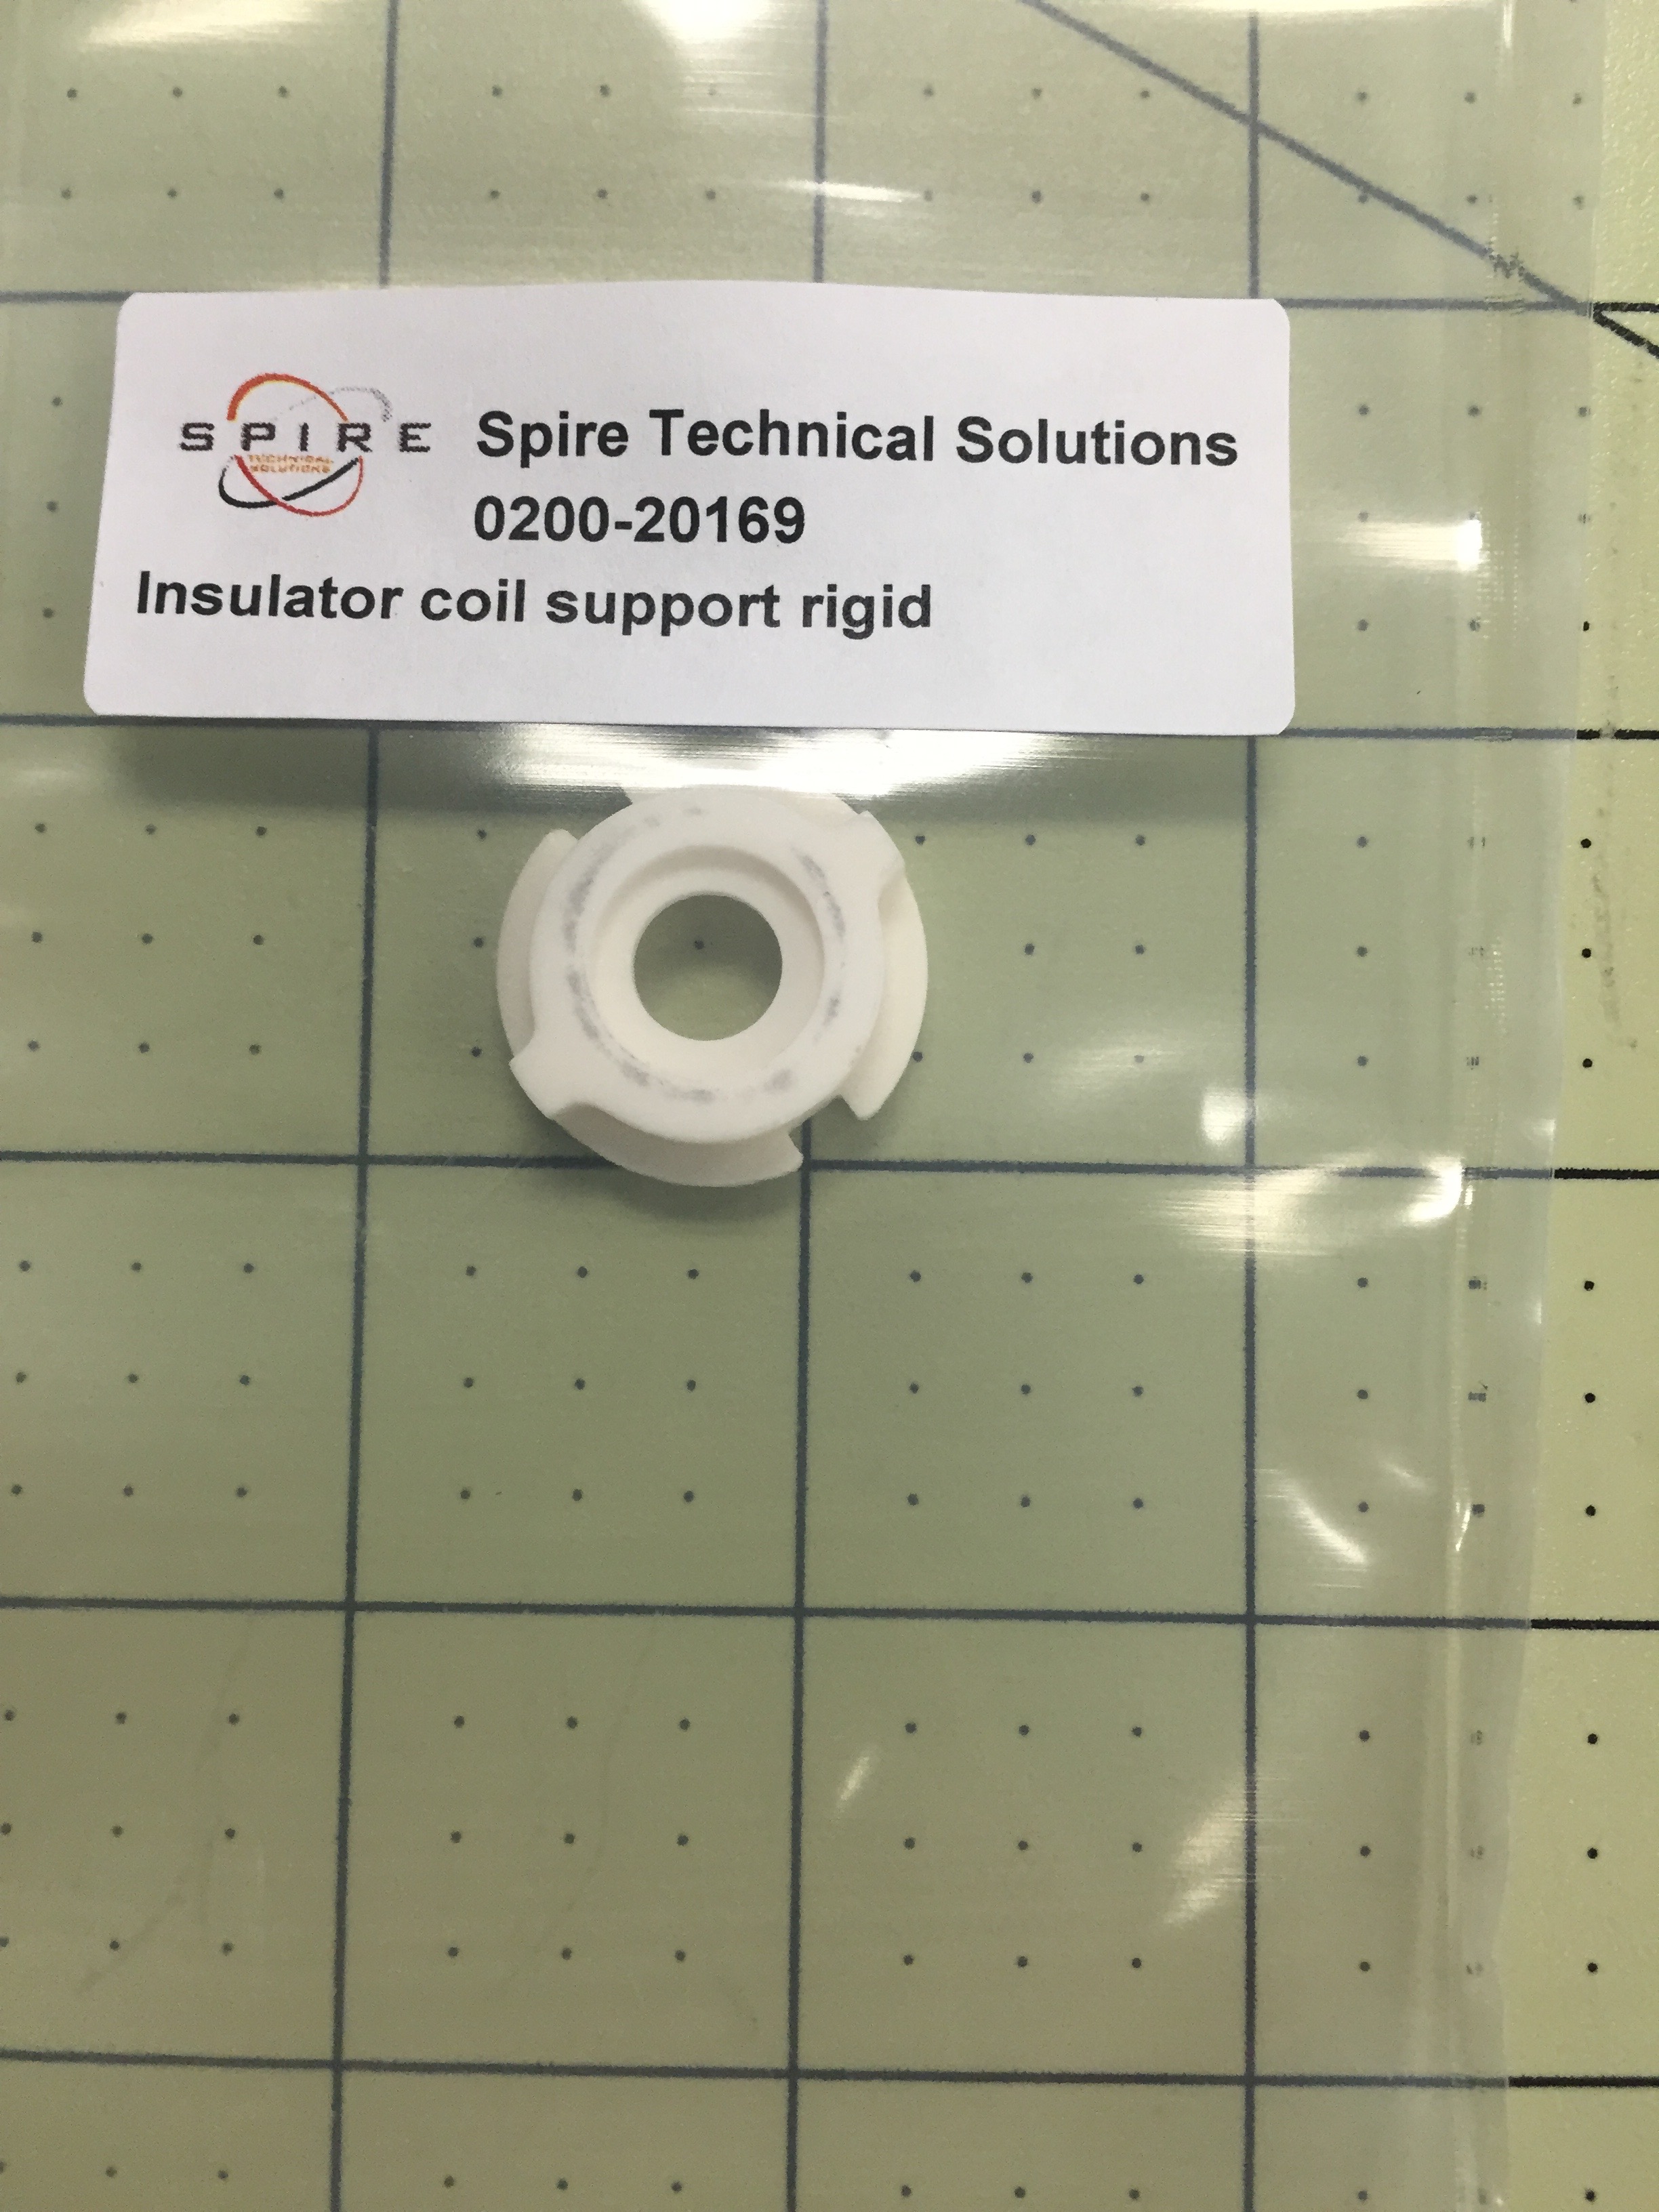 Insulator coil support rigid